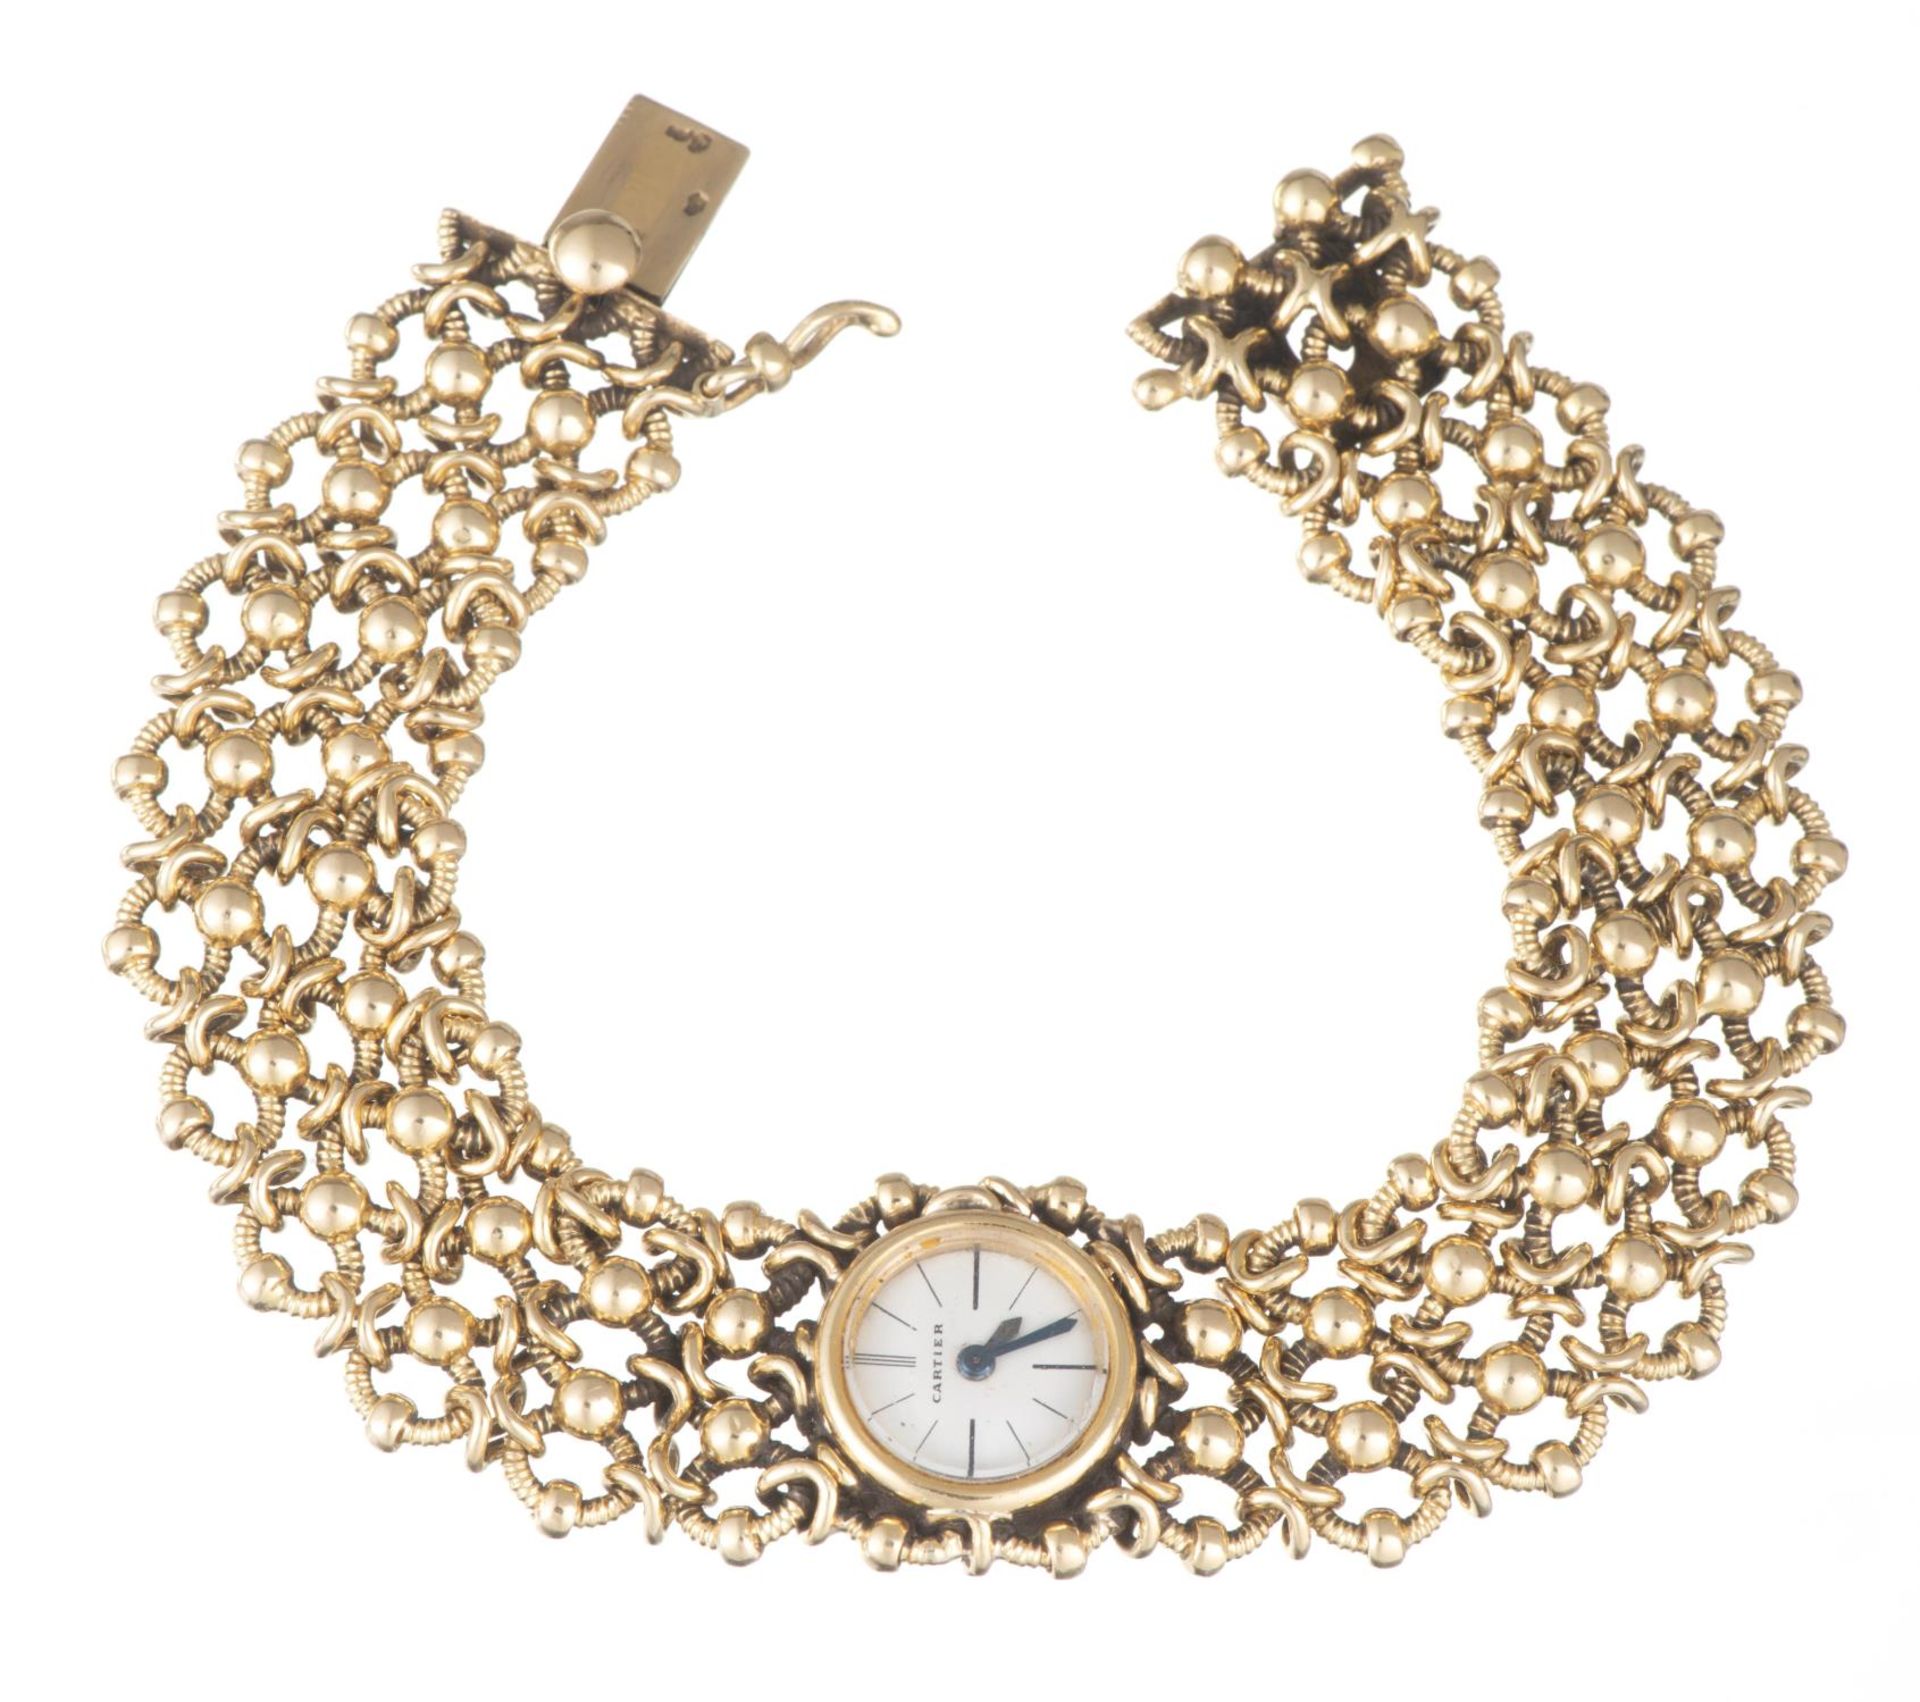 CARTIER, montre-bracelet avec bracelet en or - Image 10 of 16